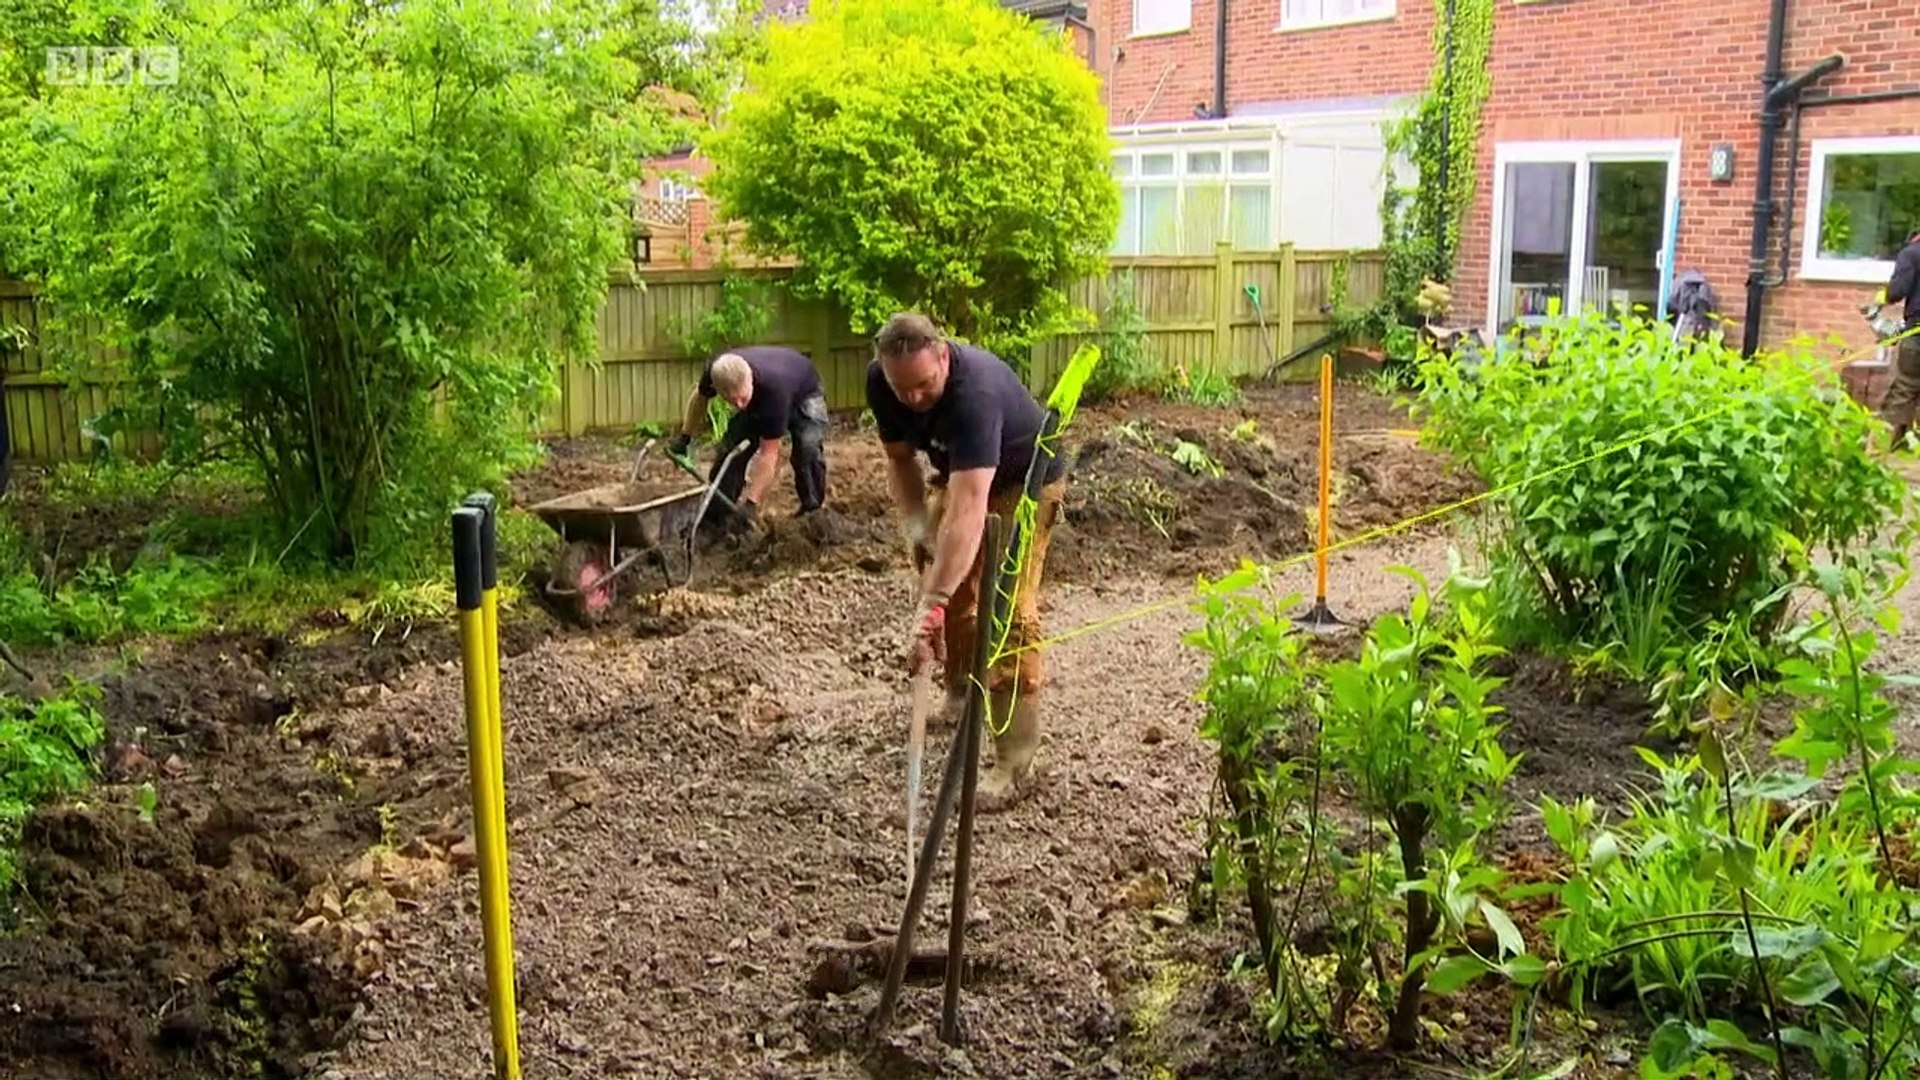 Alan Titchmarsh How to Garden How to Garden, 32 Allotment Gardening